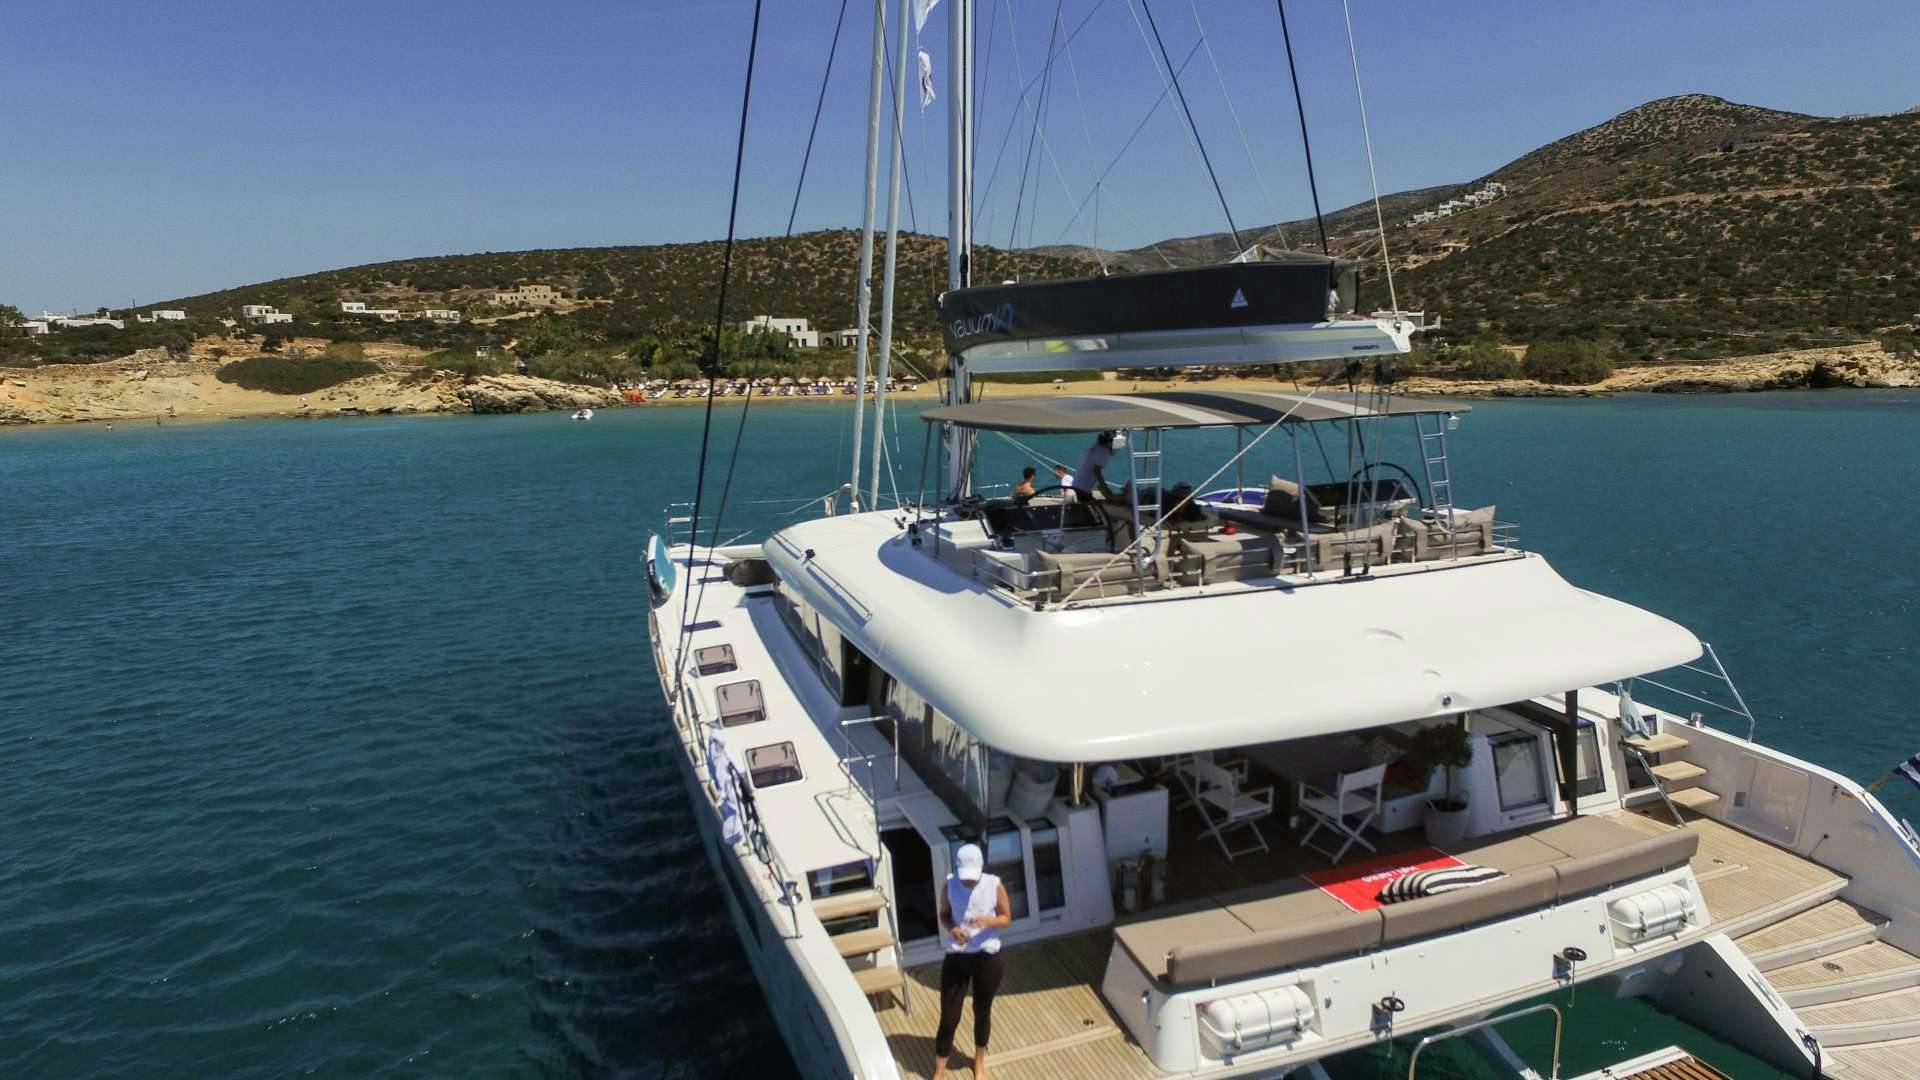 valium62 - Yacht Charter Corfu & Boat hire in Greece 1